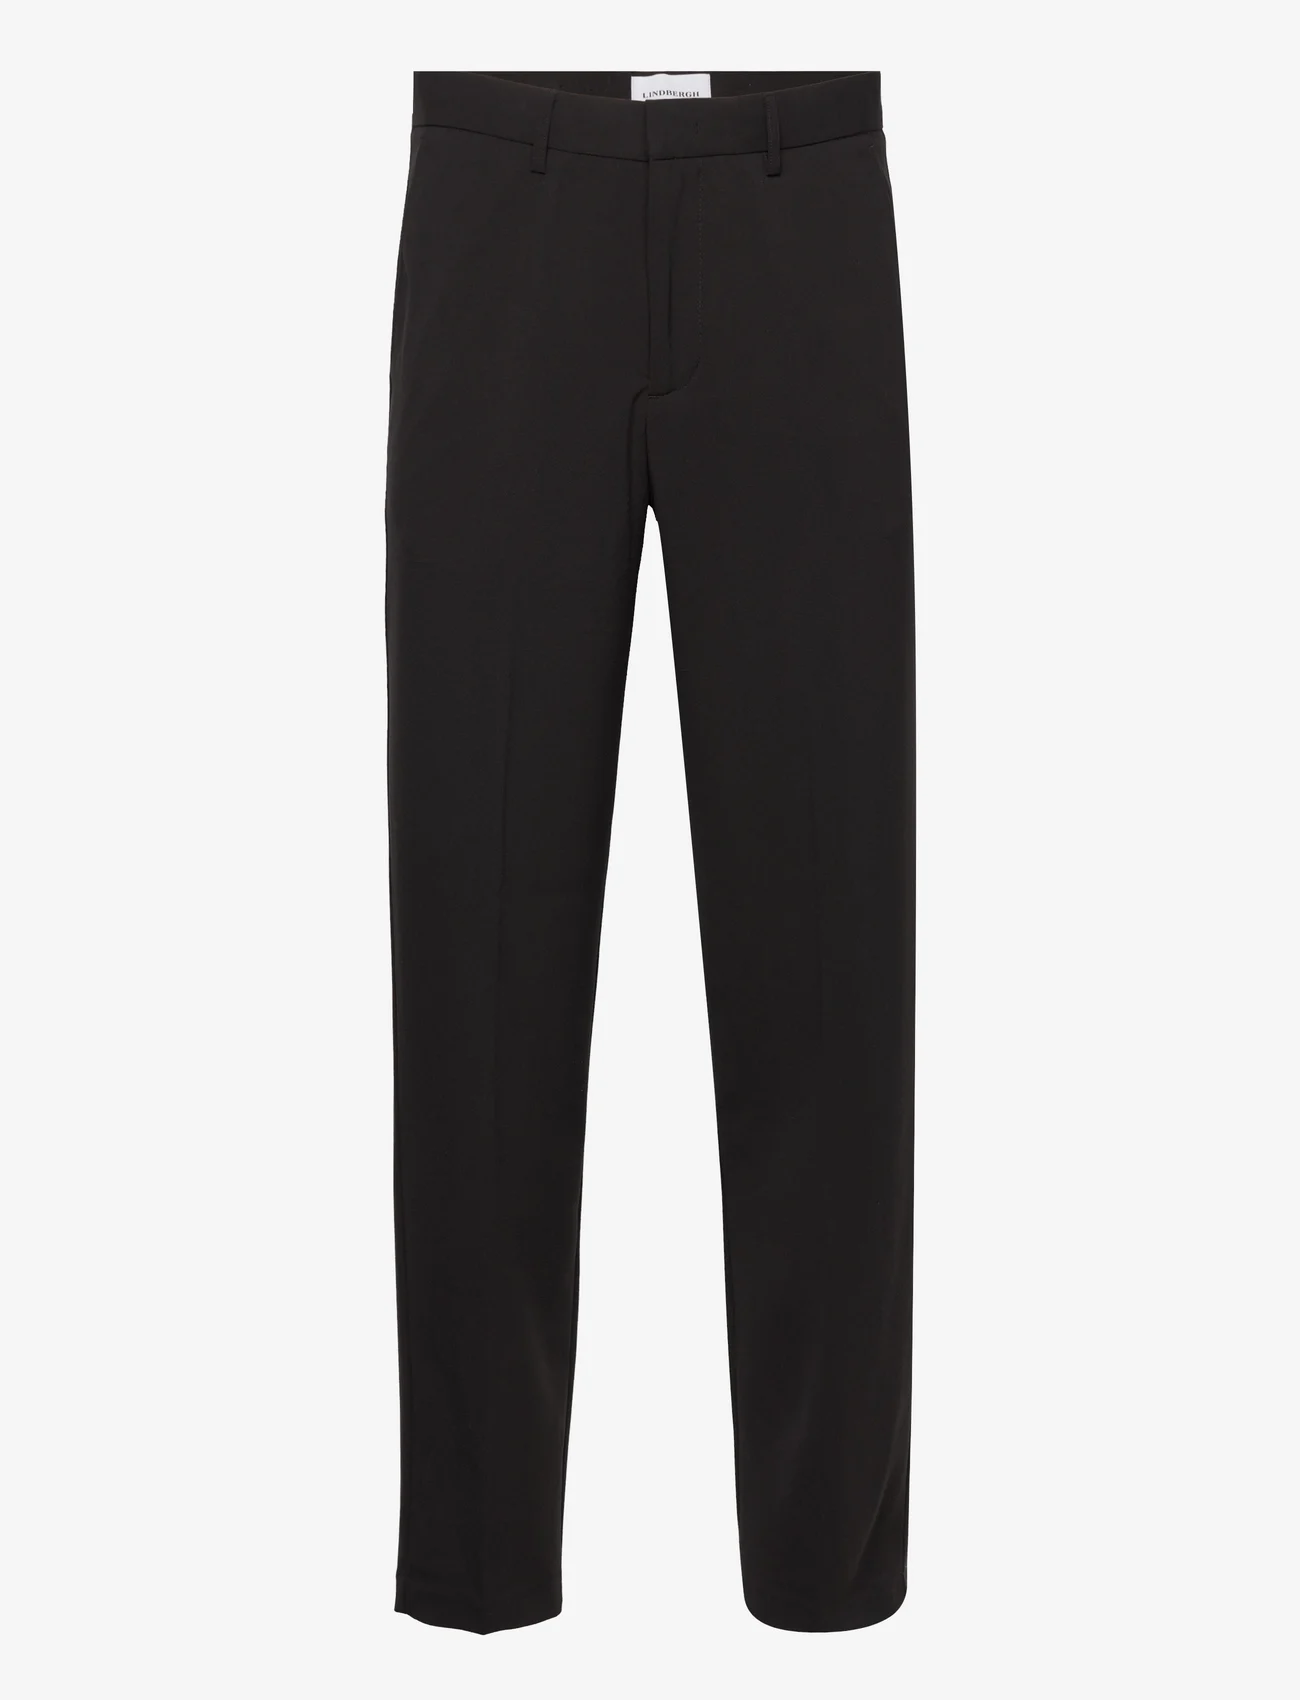 Lindbergh - Relaxed fit formal pants - jakkesætsbukser - black - 0